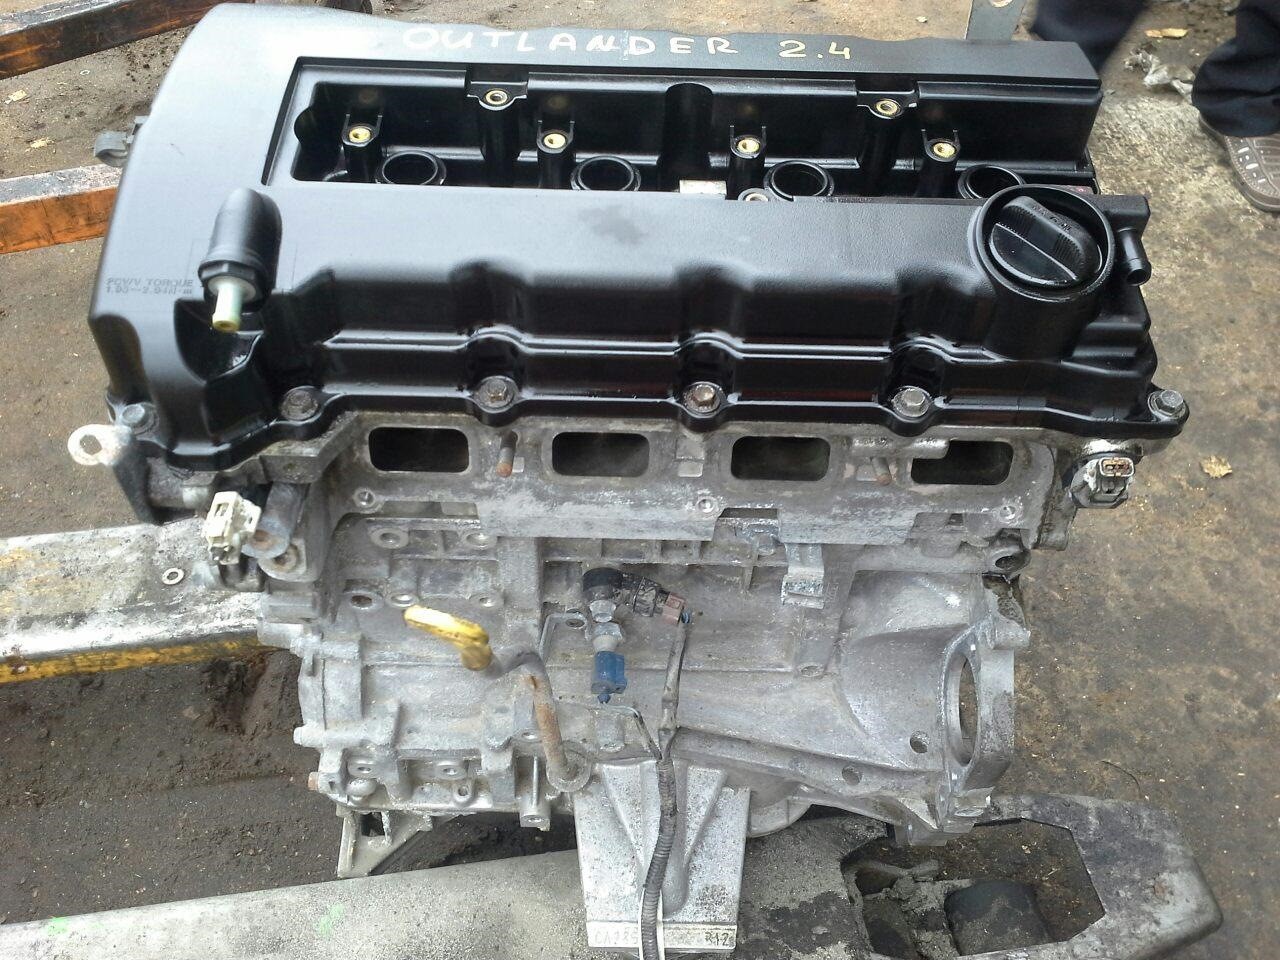 Двигатель мицубиси аутлендер хл. 4 B12 двигатель Митсубиси. G4ke 2.4. 4б11 мотор Митсубиси. Mitsubishi Outlander мотор 4 g 12.